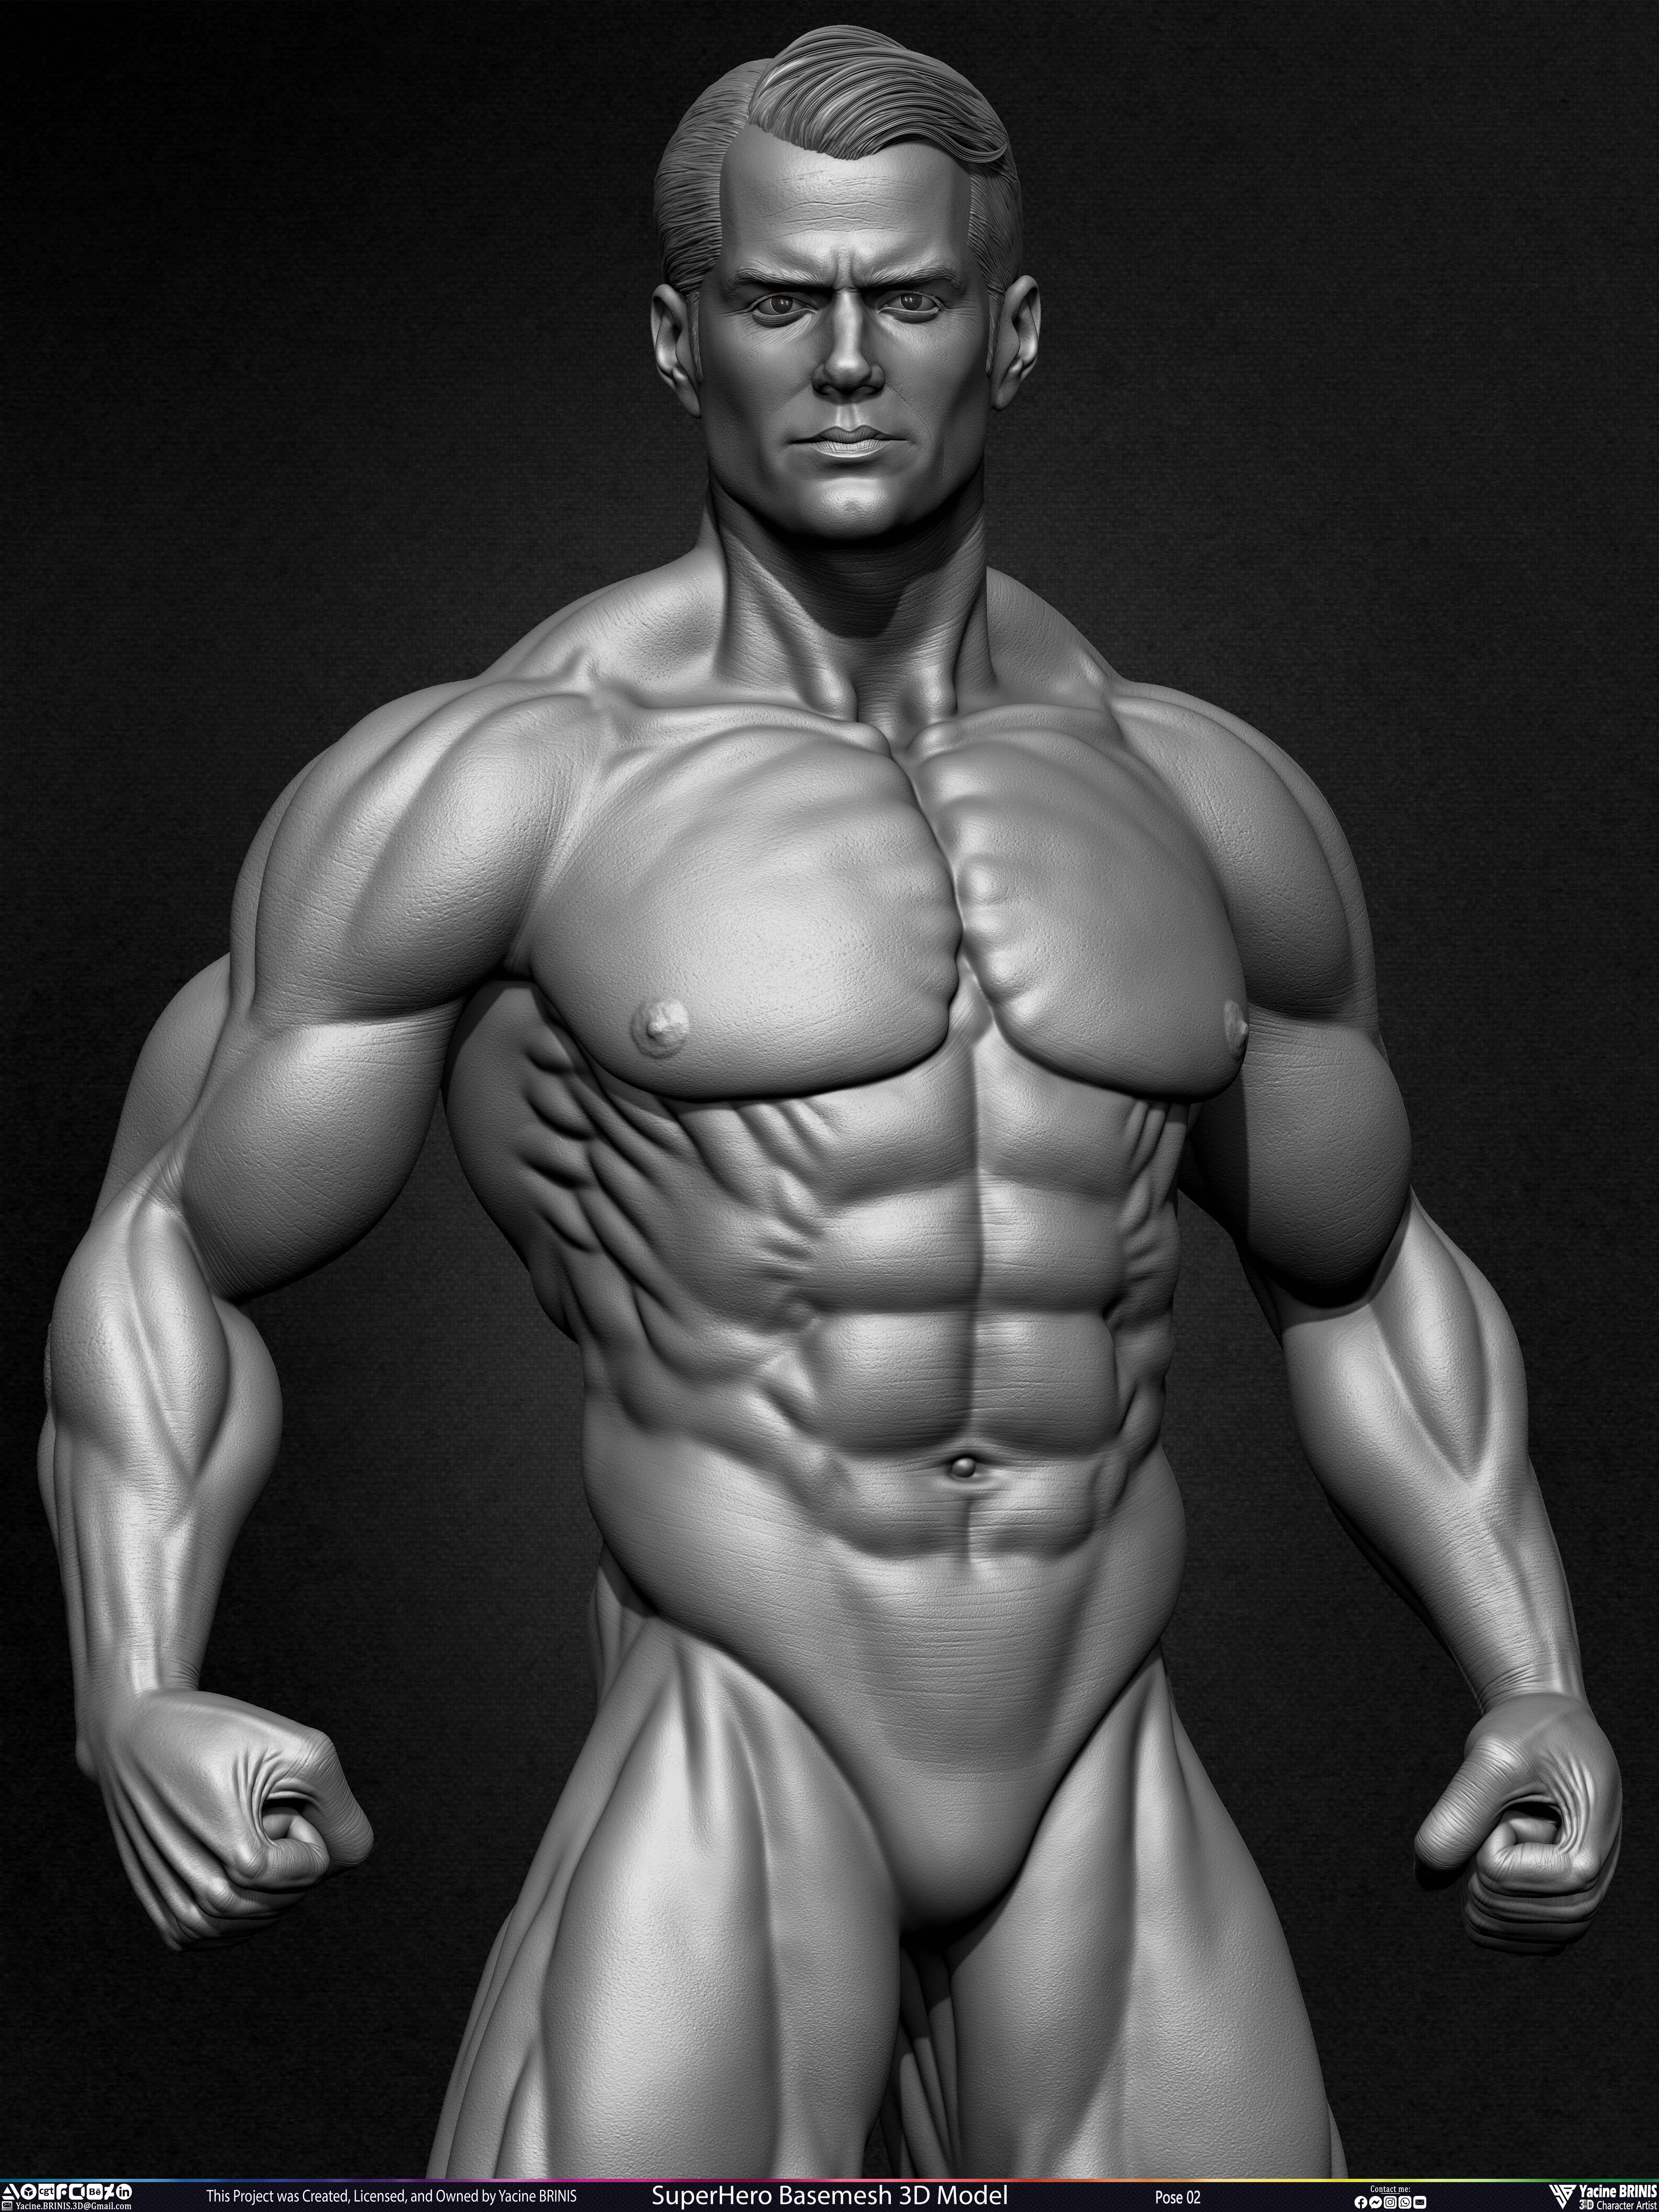 Super-Hero Basemesh 3D Model - Henry Cavill- Man of Steel - Superman - Pose 02 Sculpted by Yacine BRINIS Set 015